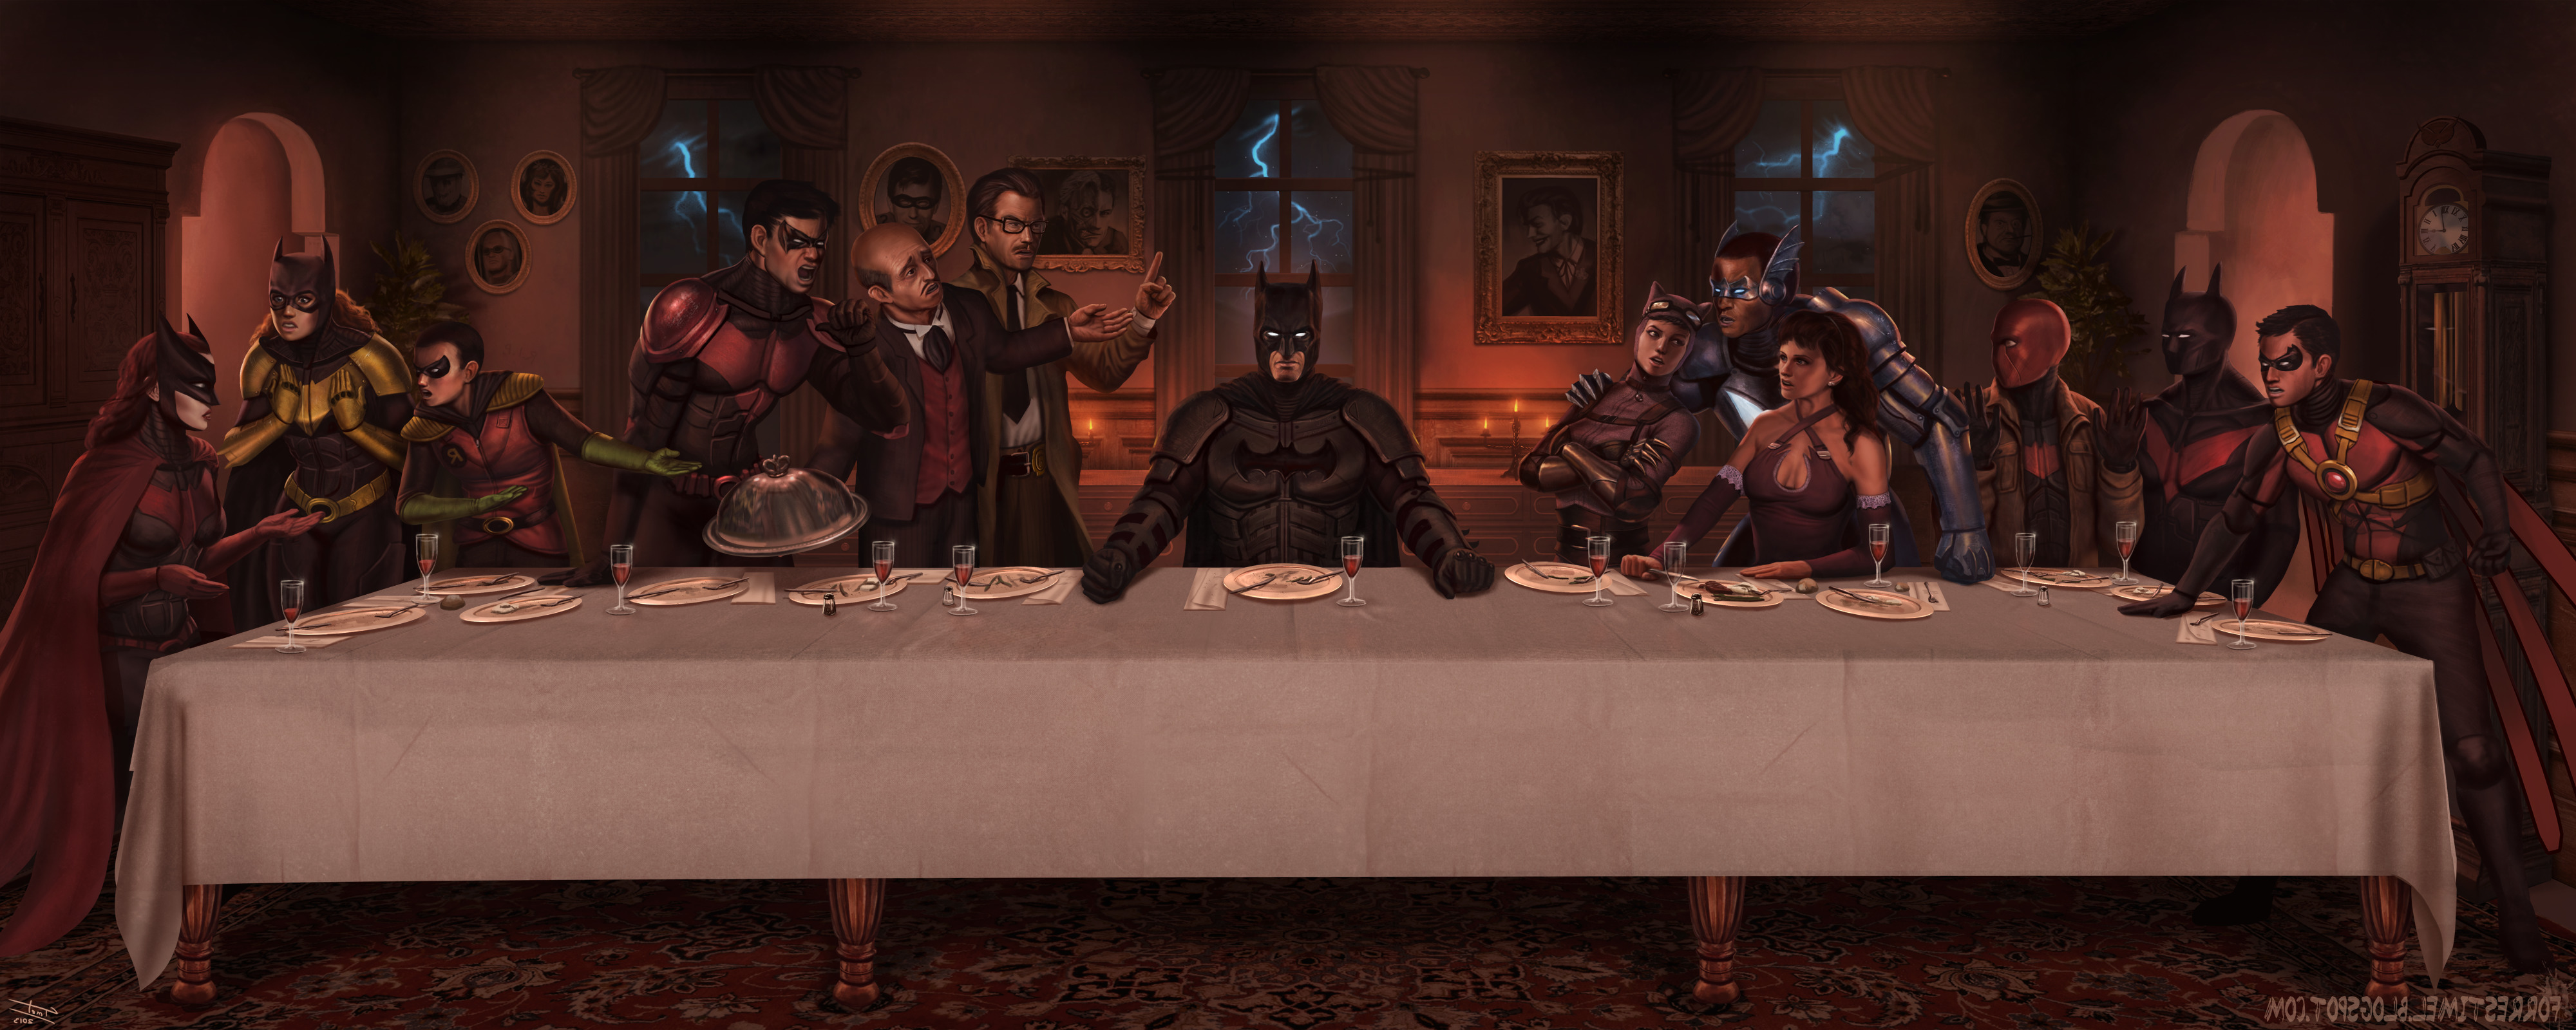 DC Comics, Robin (character), Batman, Catwoman, Nightwing, Red Hood, Cène, The Last Supper Wallpaper